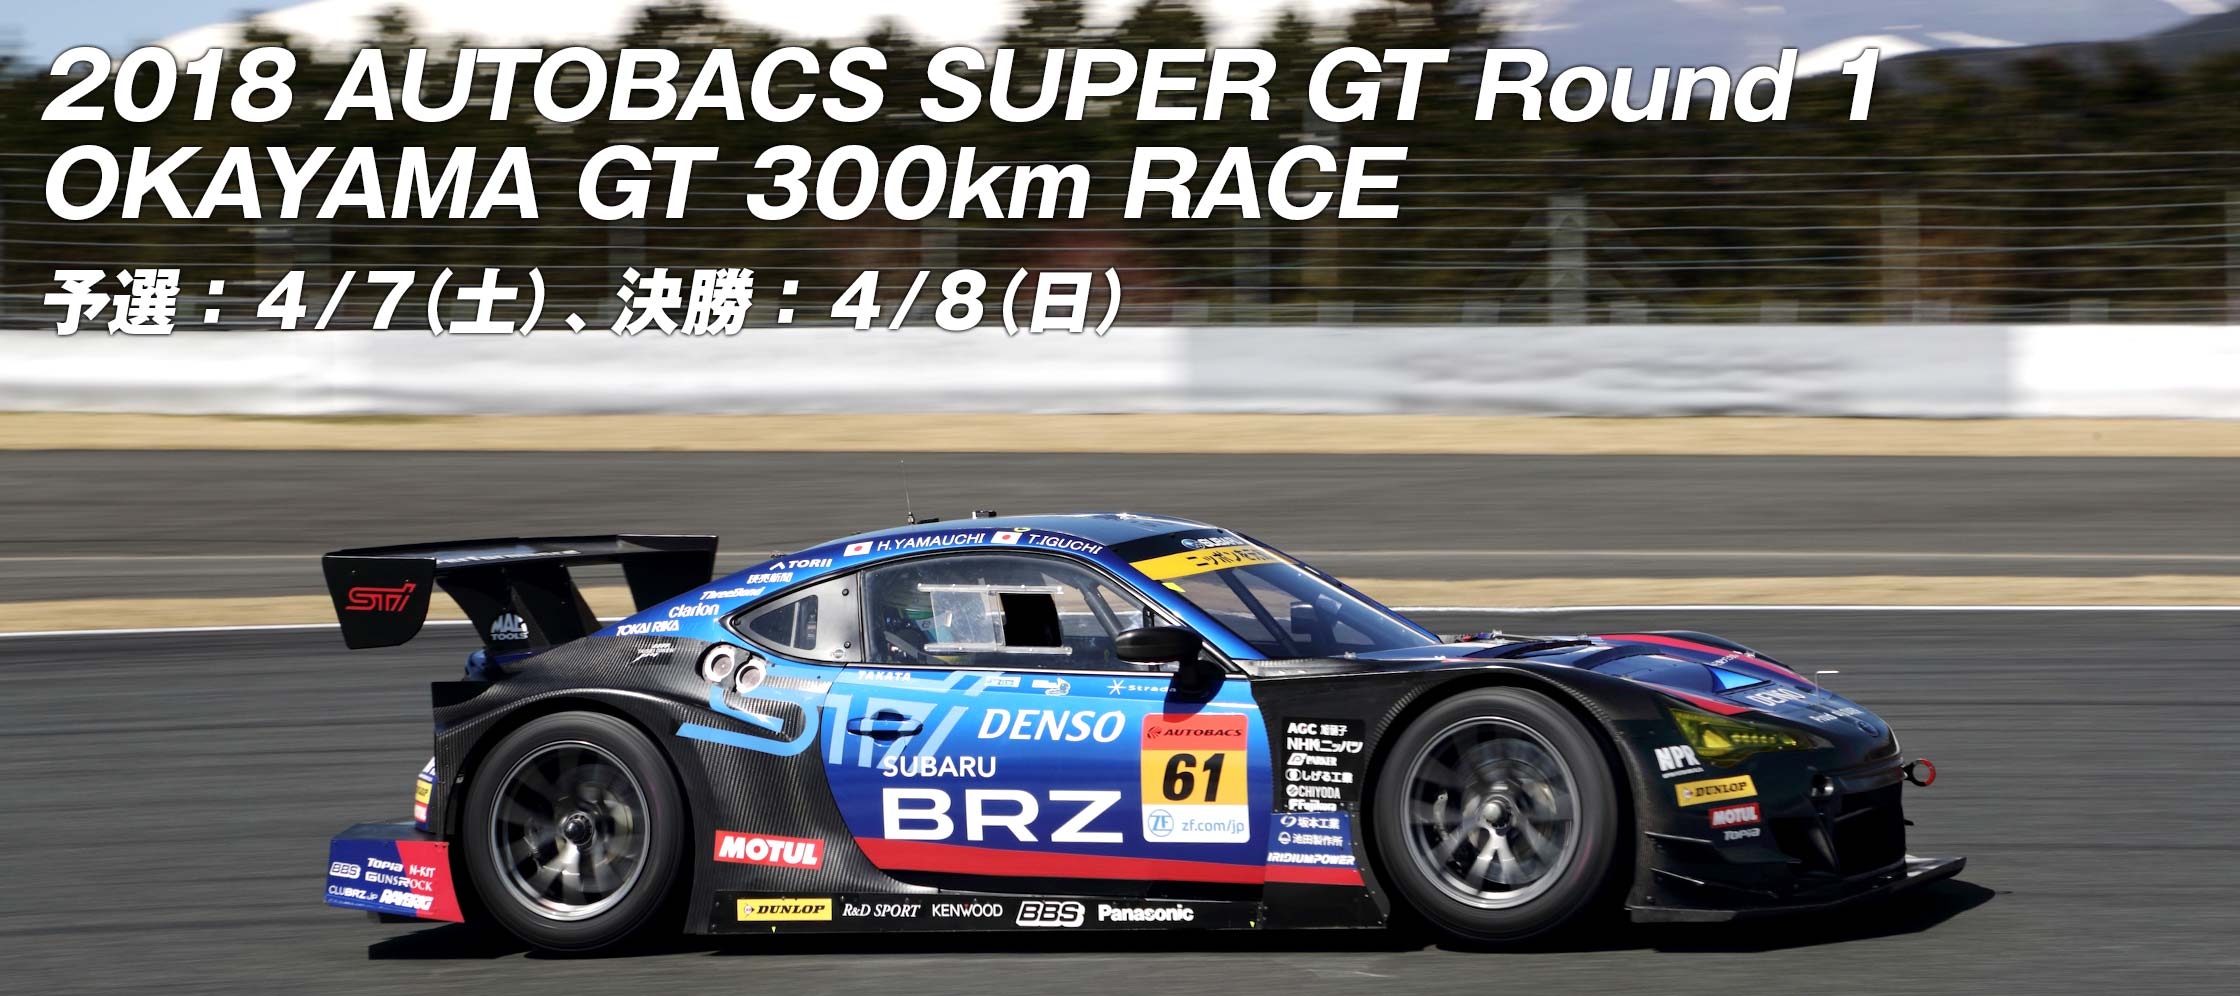 Super Gt Subaru Sti Motorsport 公式モータースポーツサイト